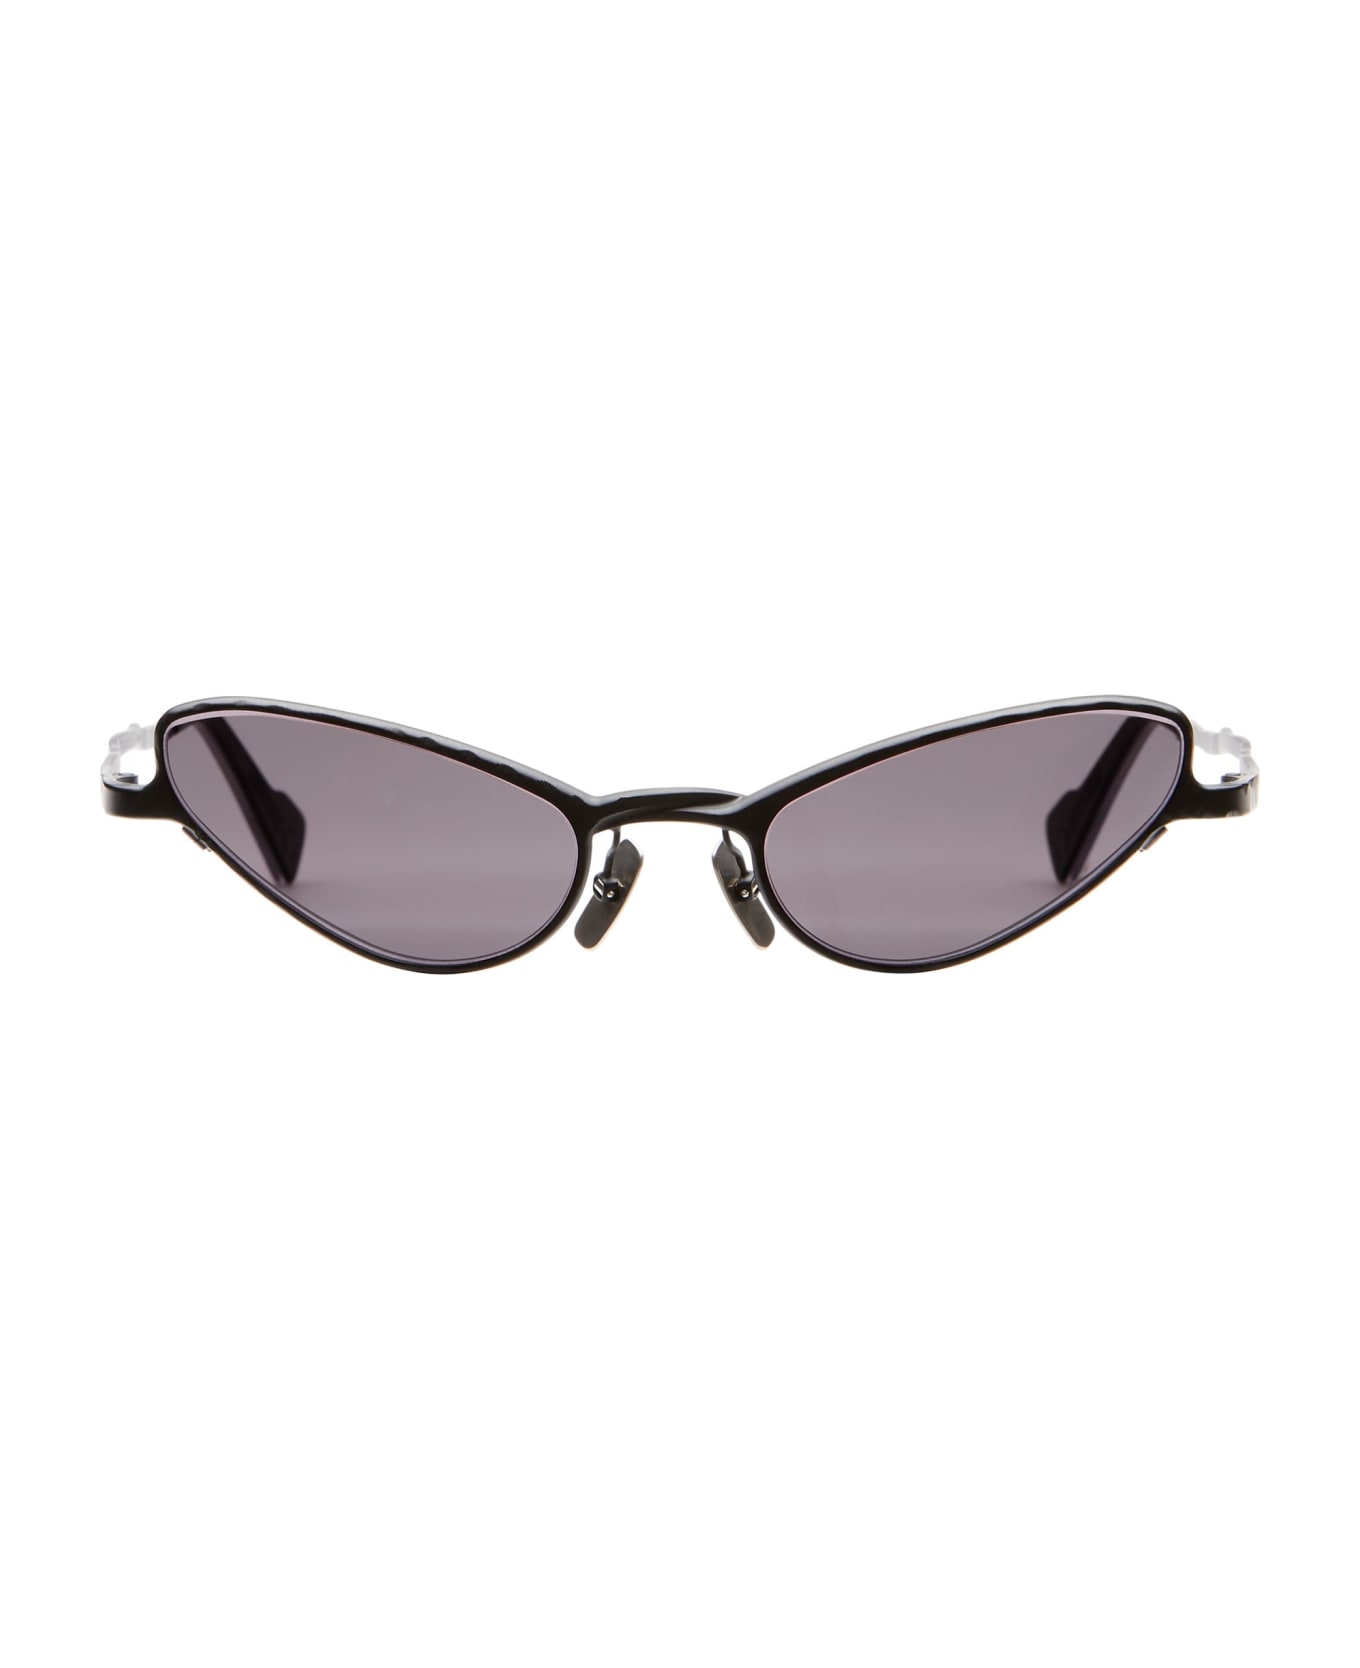 Kuboraum Mask Z22 - Black Matte Sunglasses - Matte black サングラス